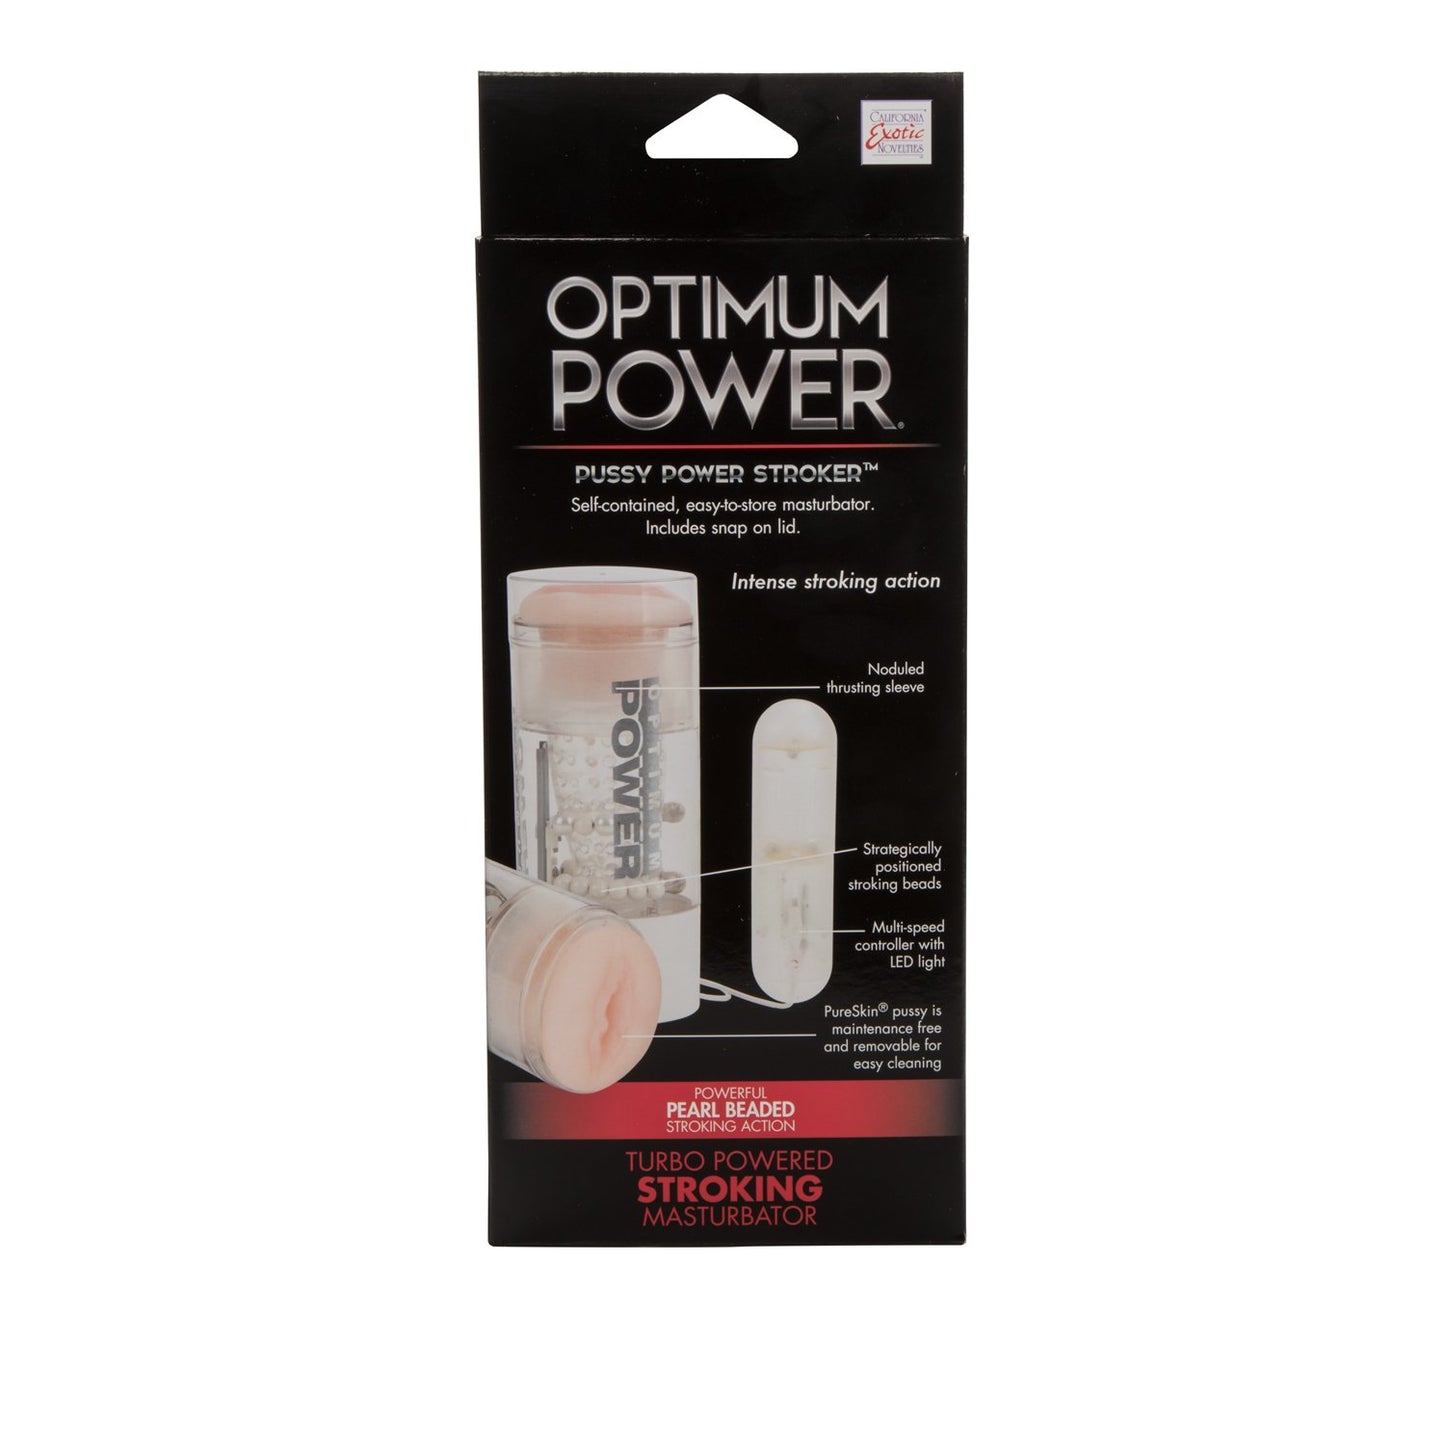 Optimum Power® Pussy Power Stroker™